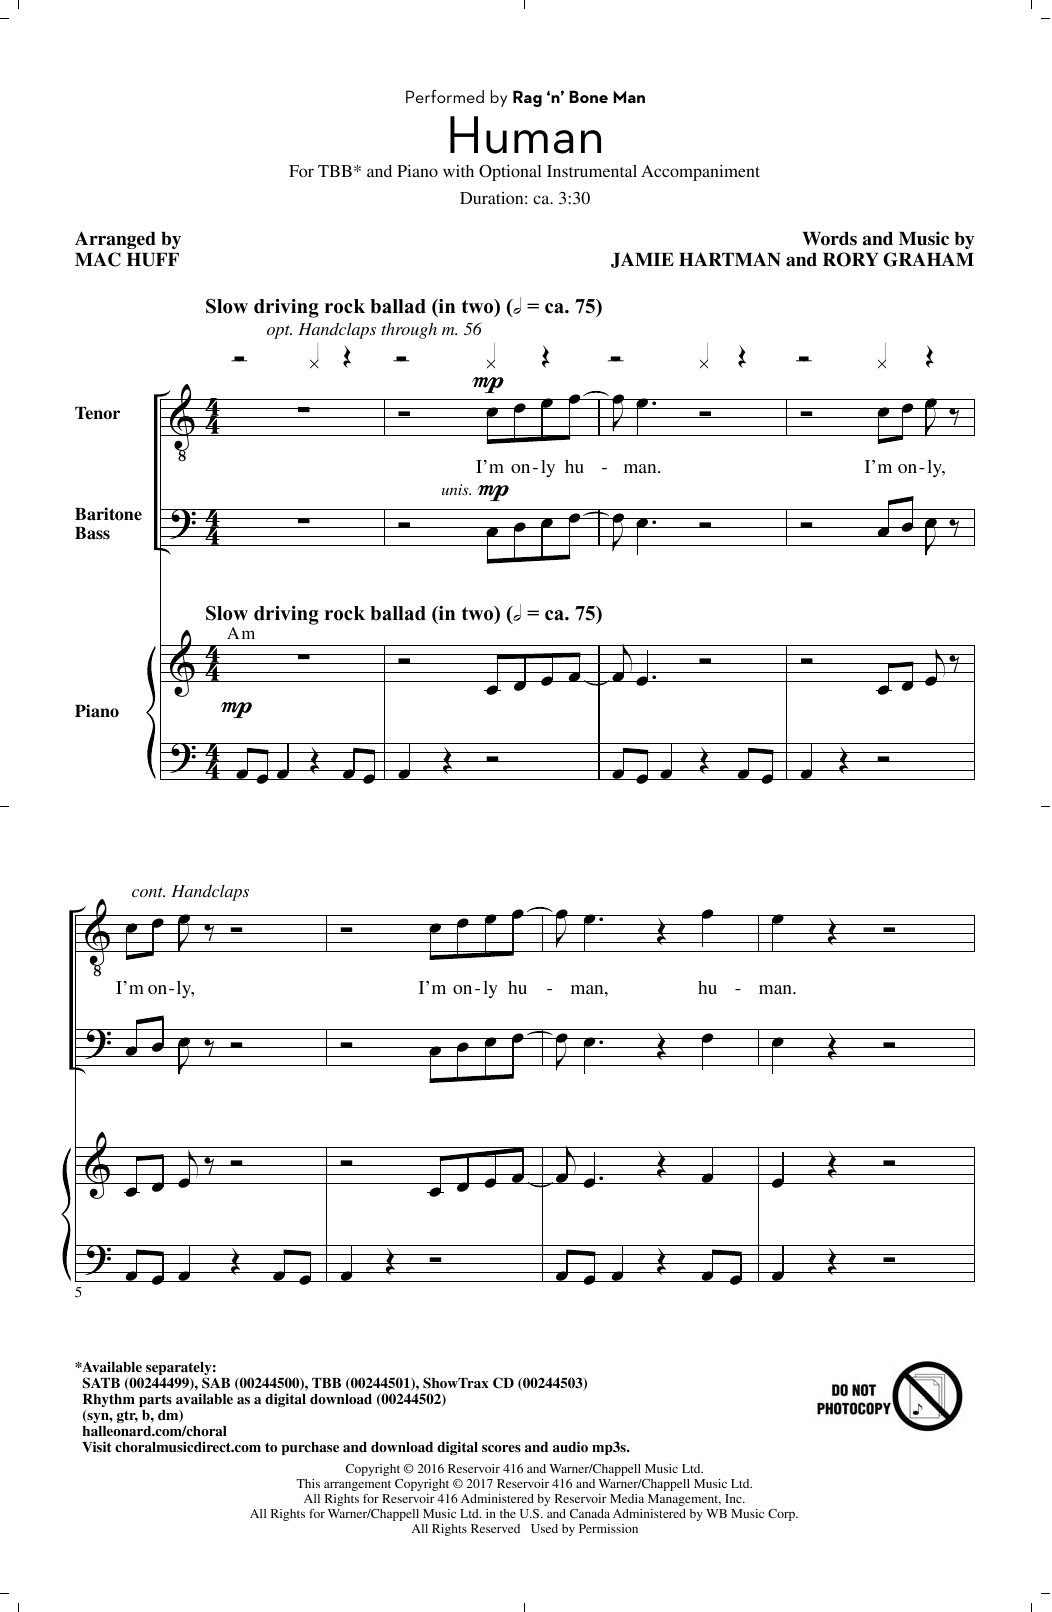 Rag'n'Bone Man Human (arr. Mac Huff) Sheet Music Notes & Chords for SATB - Download or Print PDF